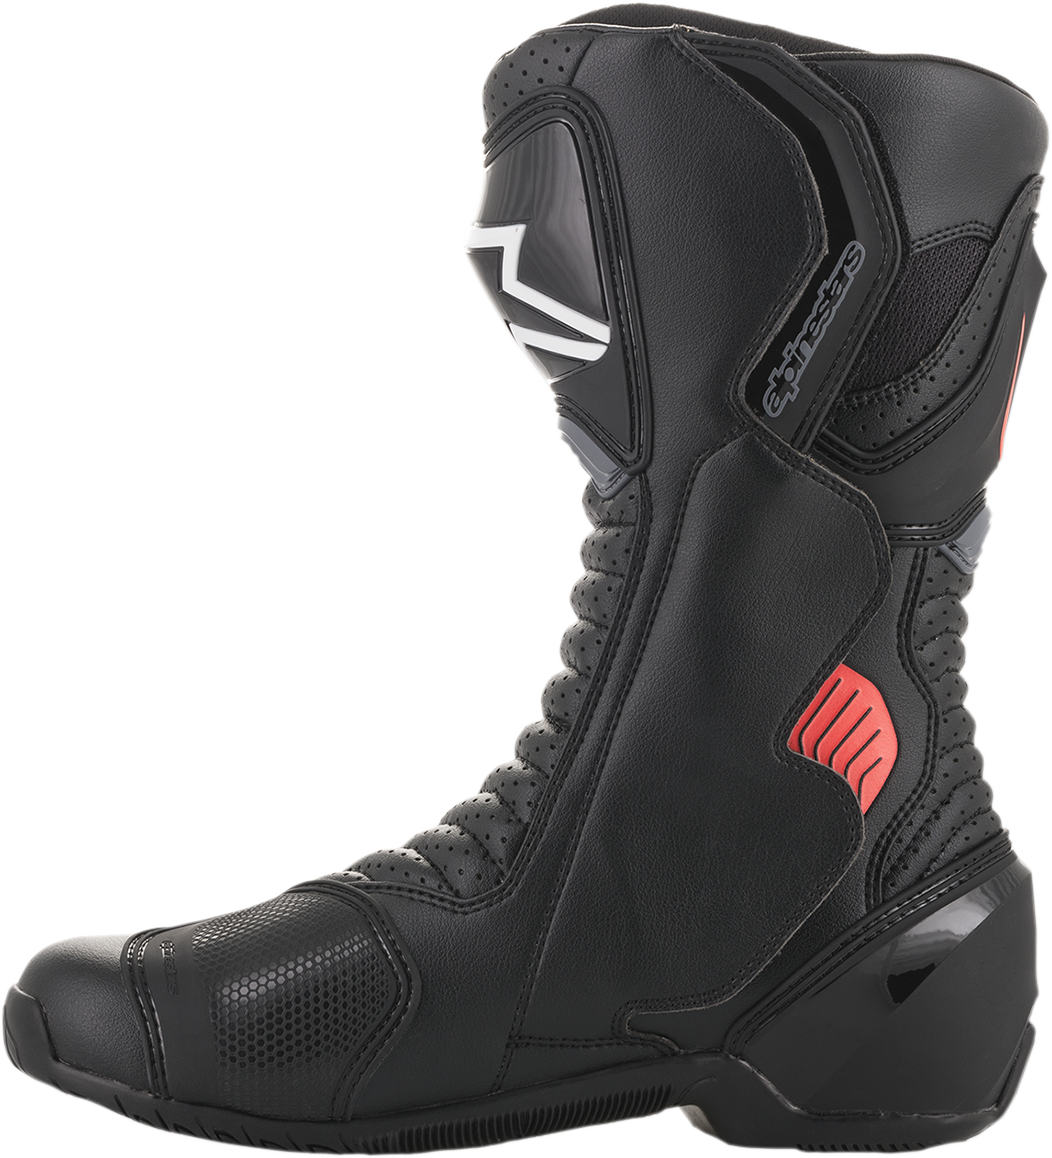 ALPINESTARS SMX-6 v2 Vented Boots - Black/Gray/Red - US 13.5 / EU 49 2223017-1133-49